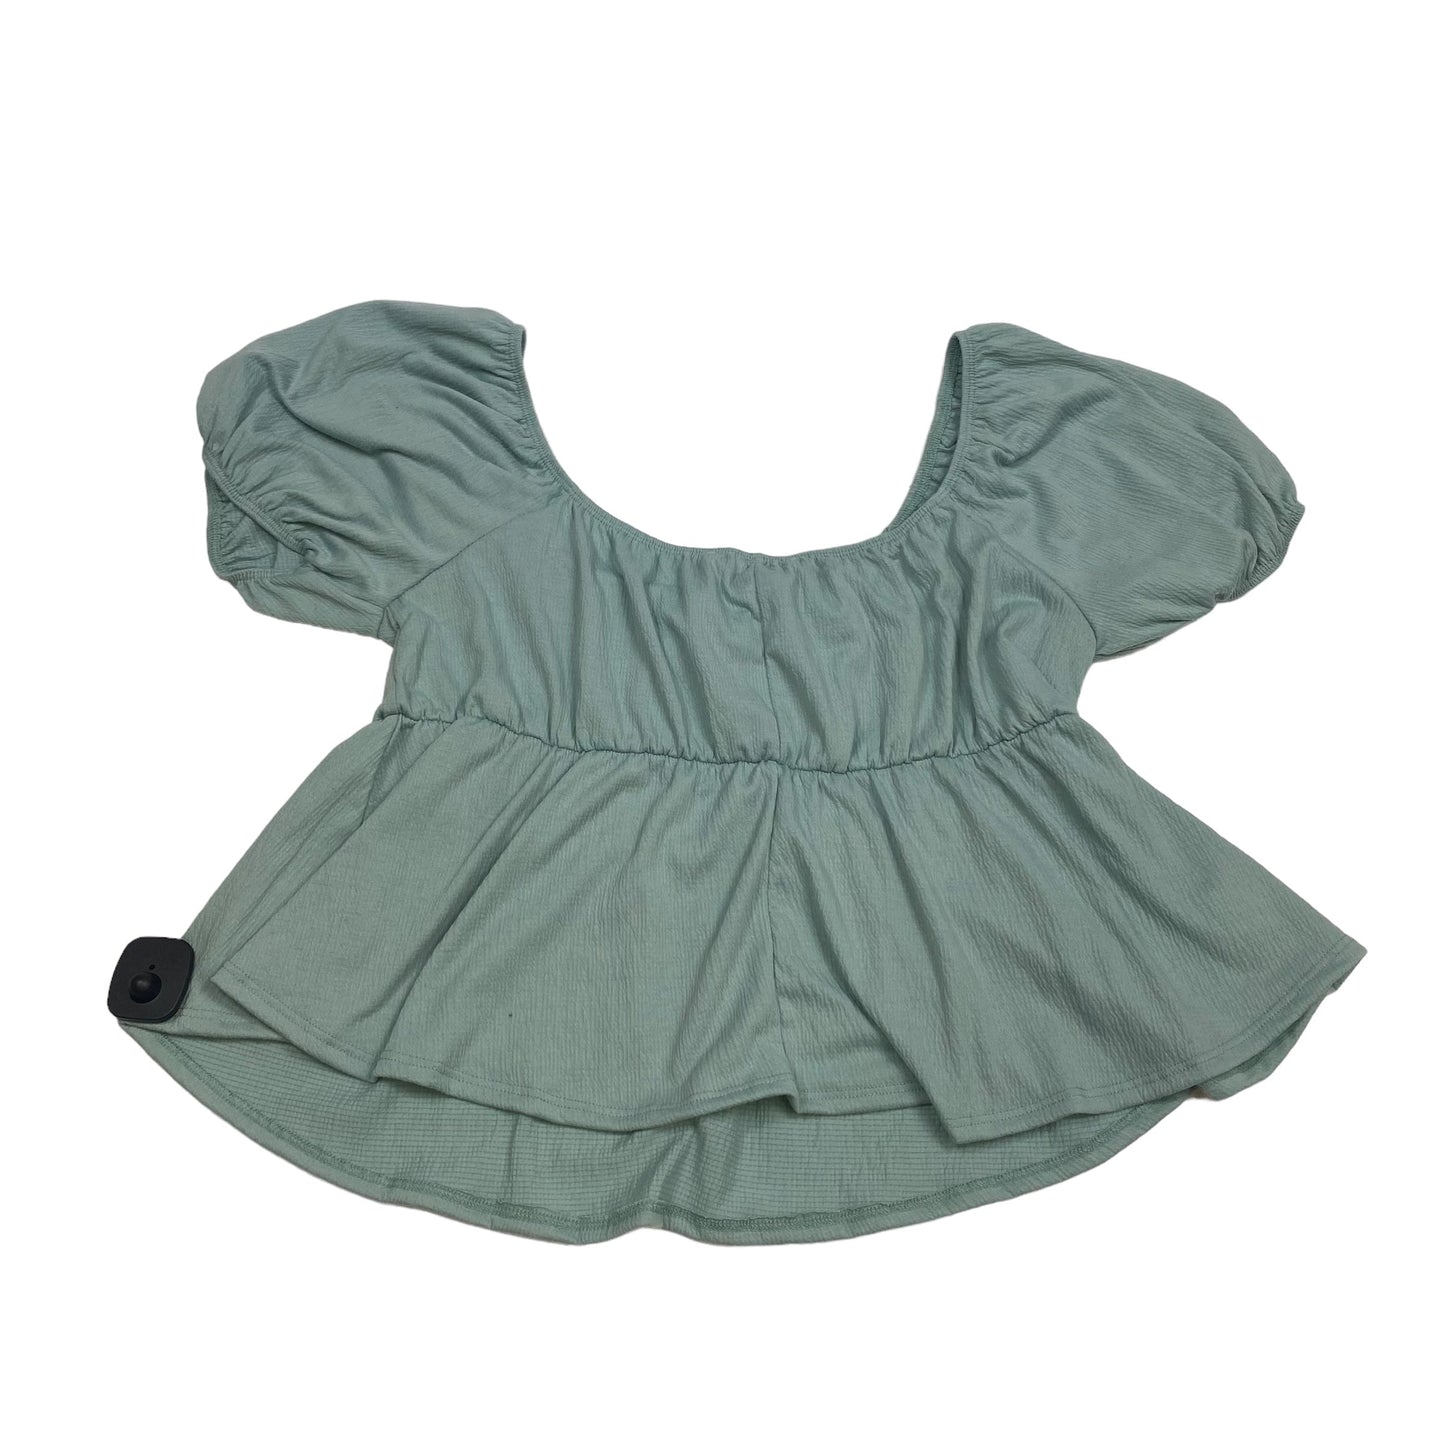 Green Top Short Sleeve Arula, Size 1x